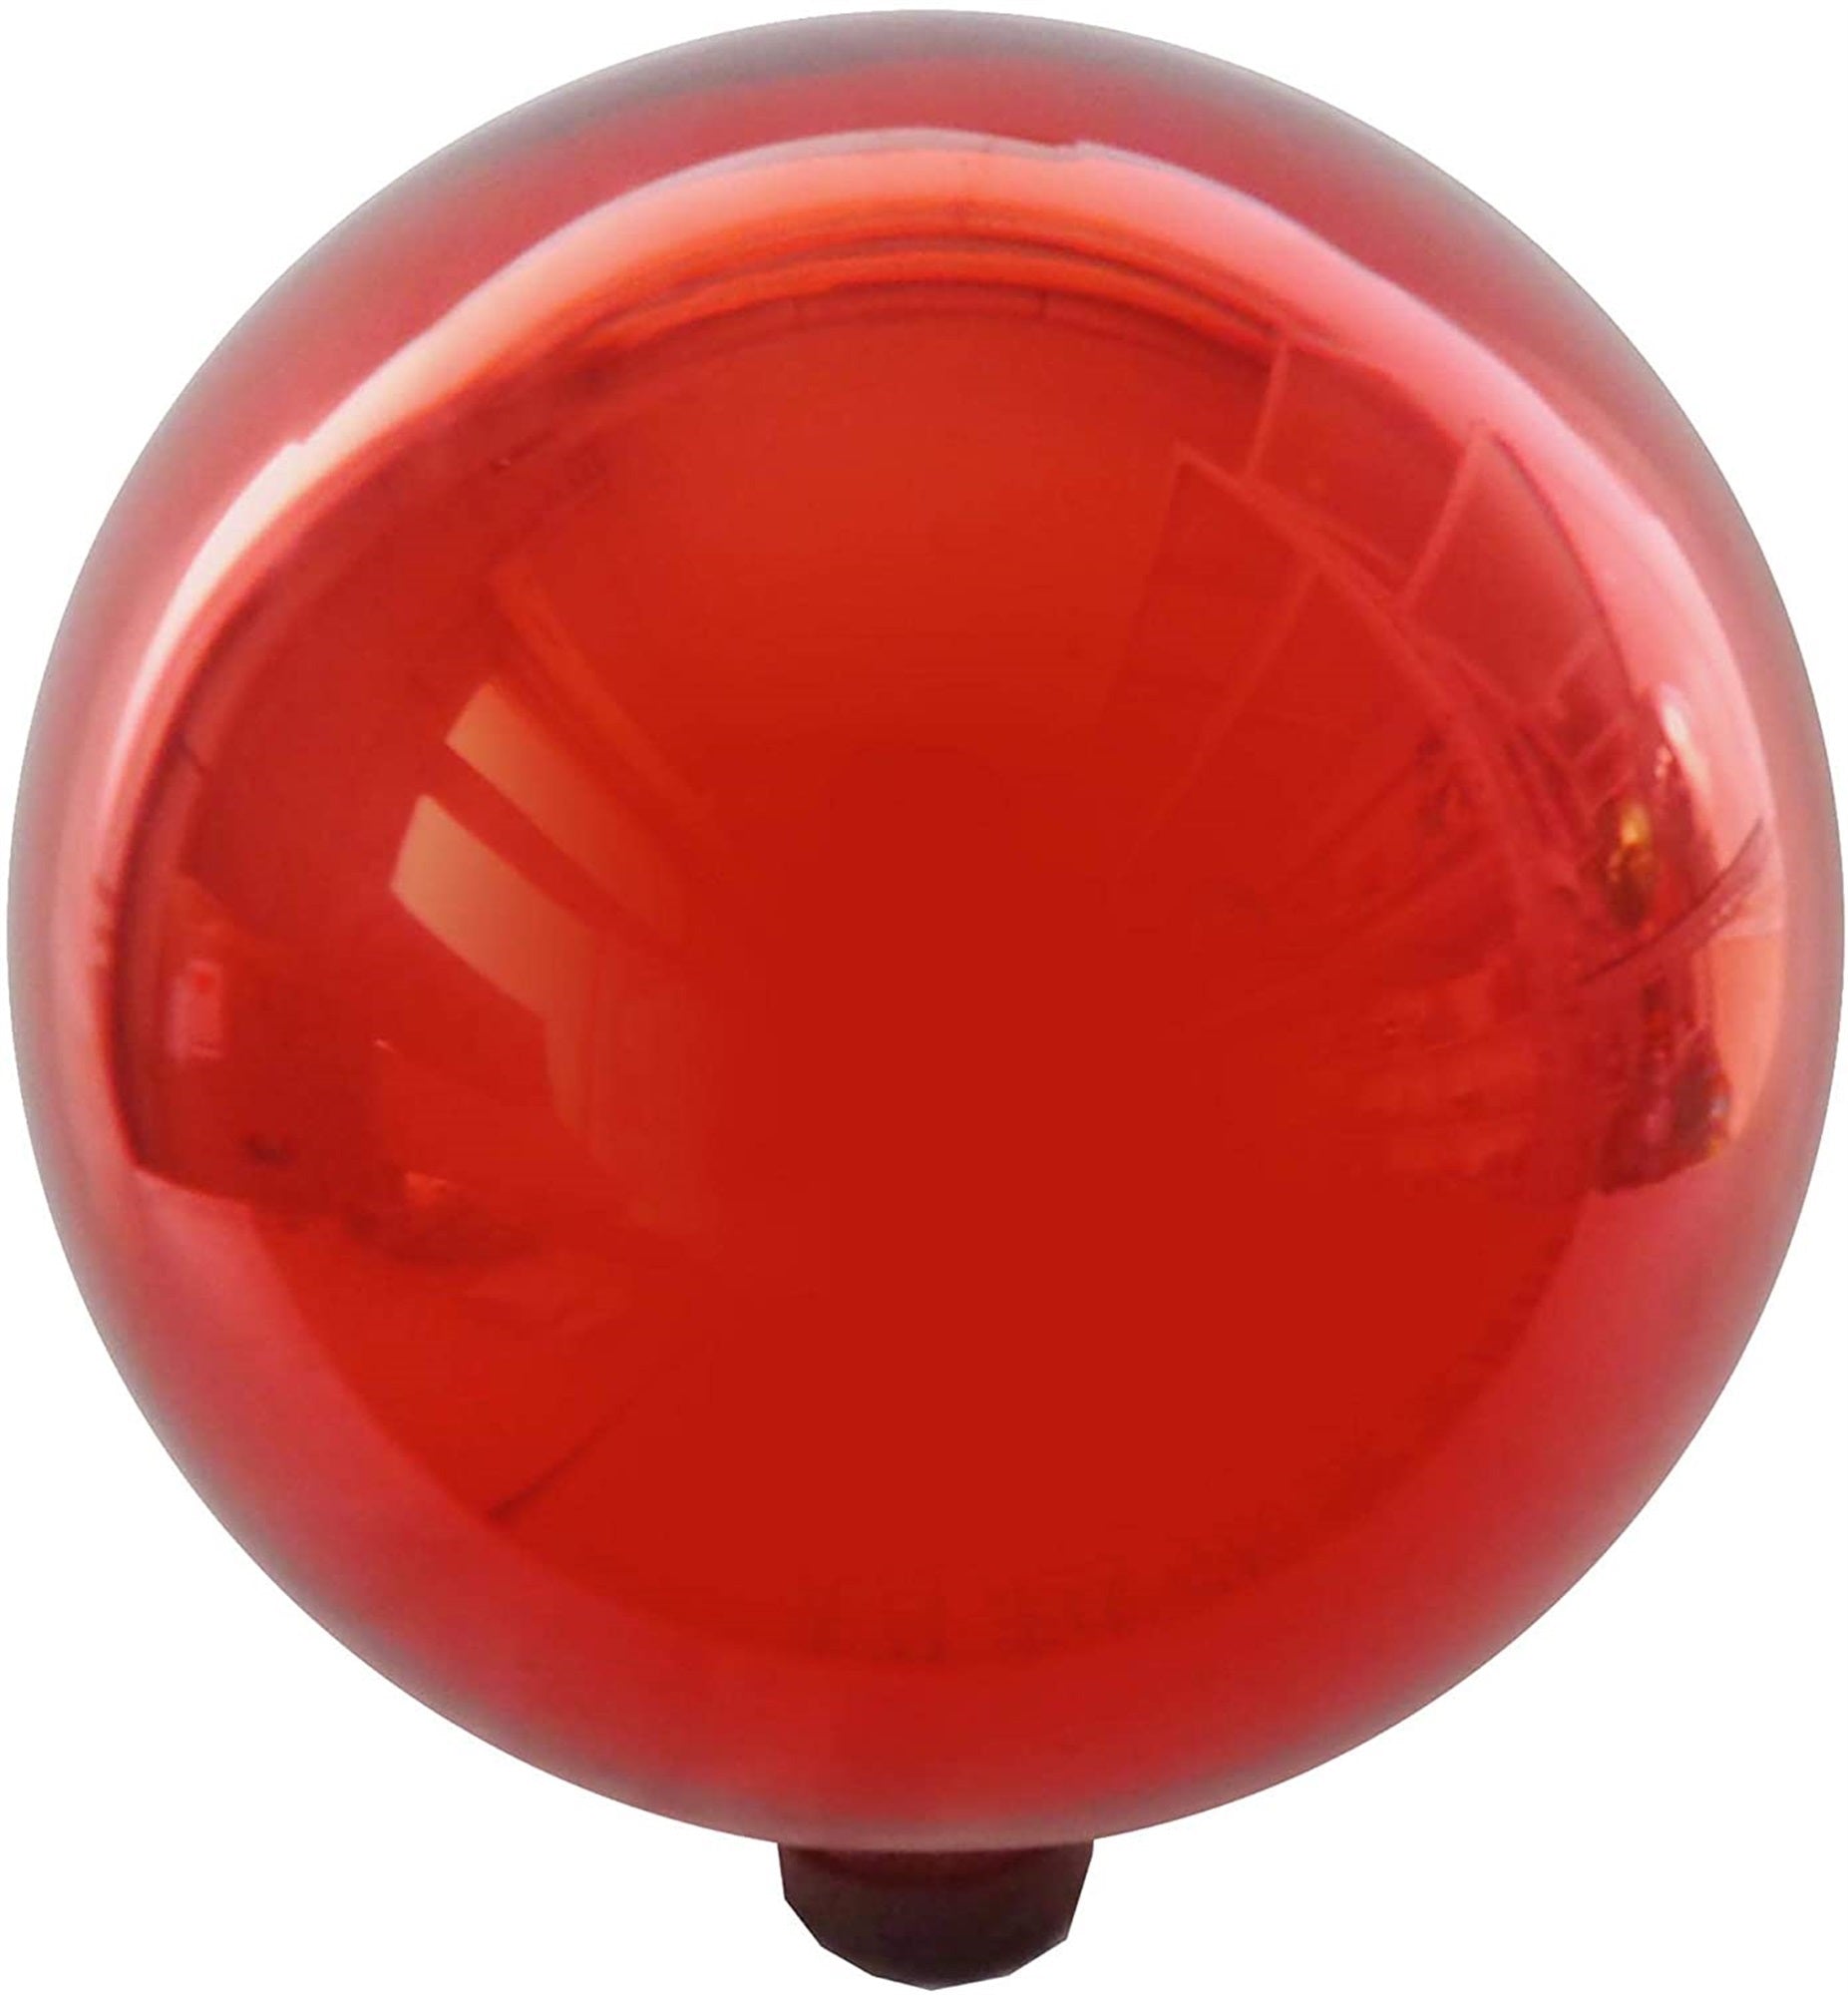 Gardener's Select Glass Gazing Globe, Metallic Red, 10"